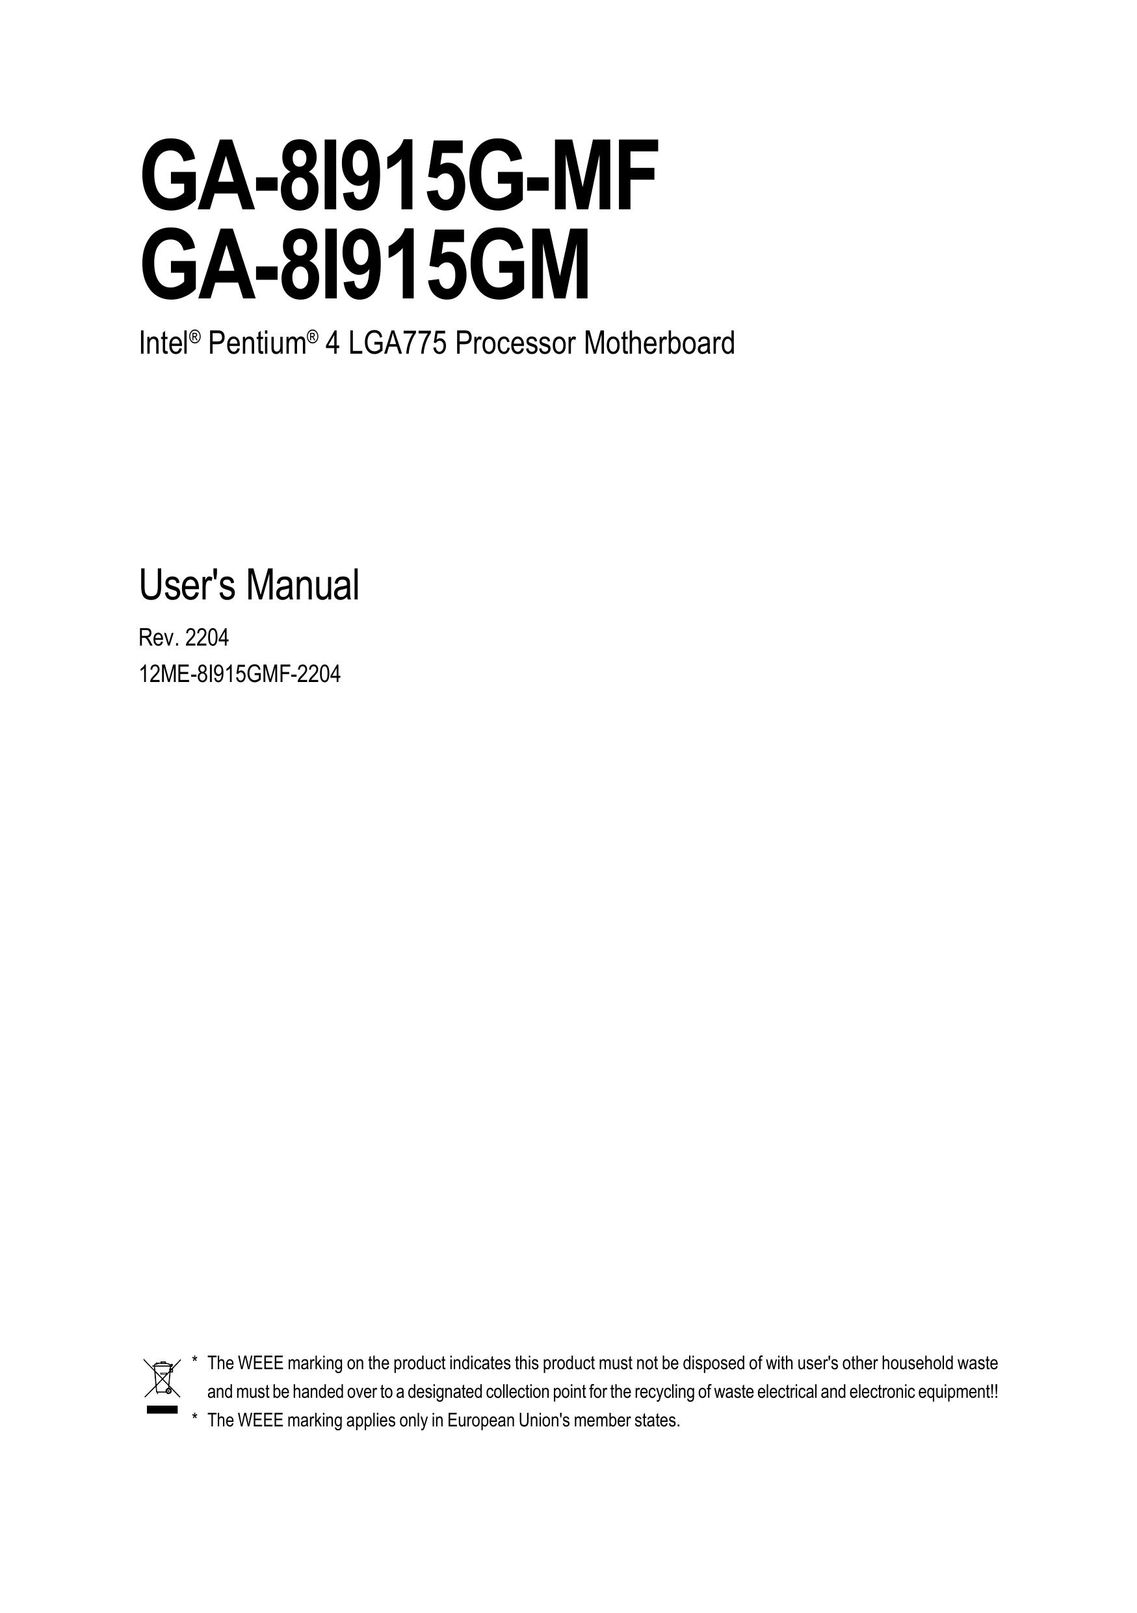 Gigabyte GA-8I915GM Computer Hardware User Manual